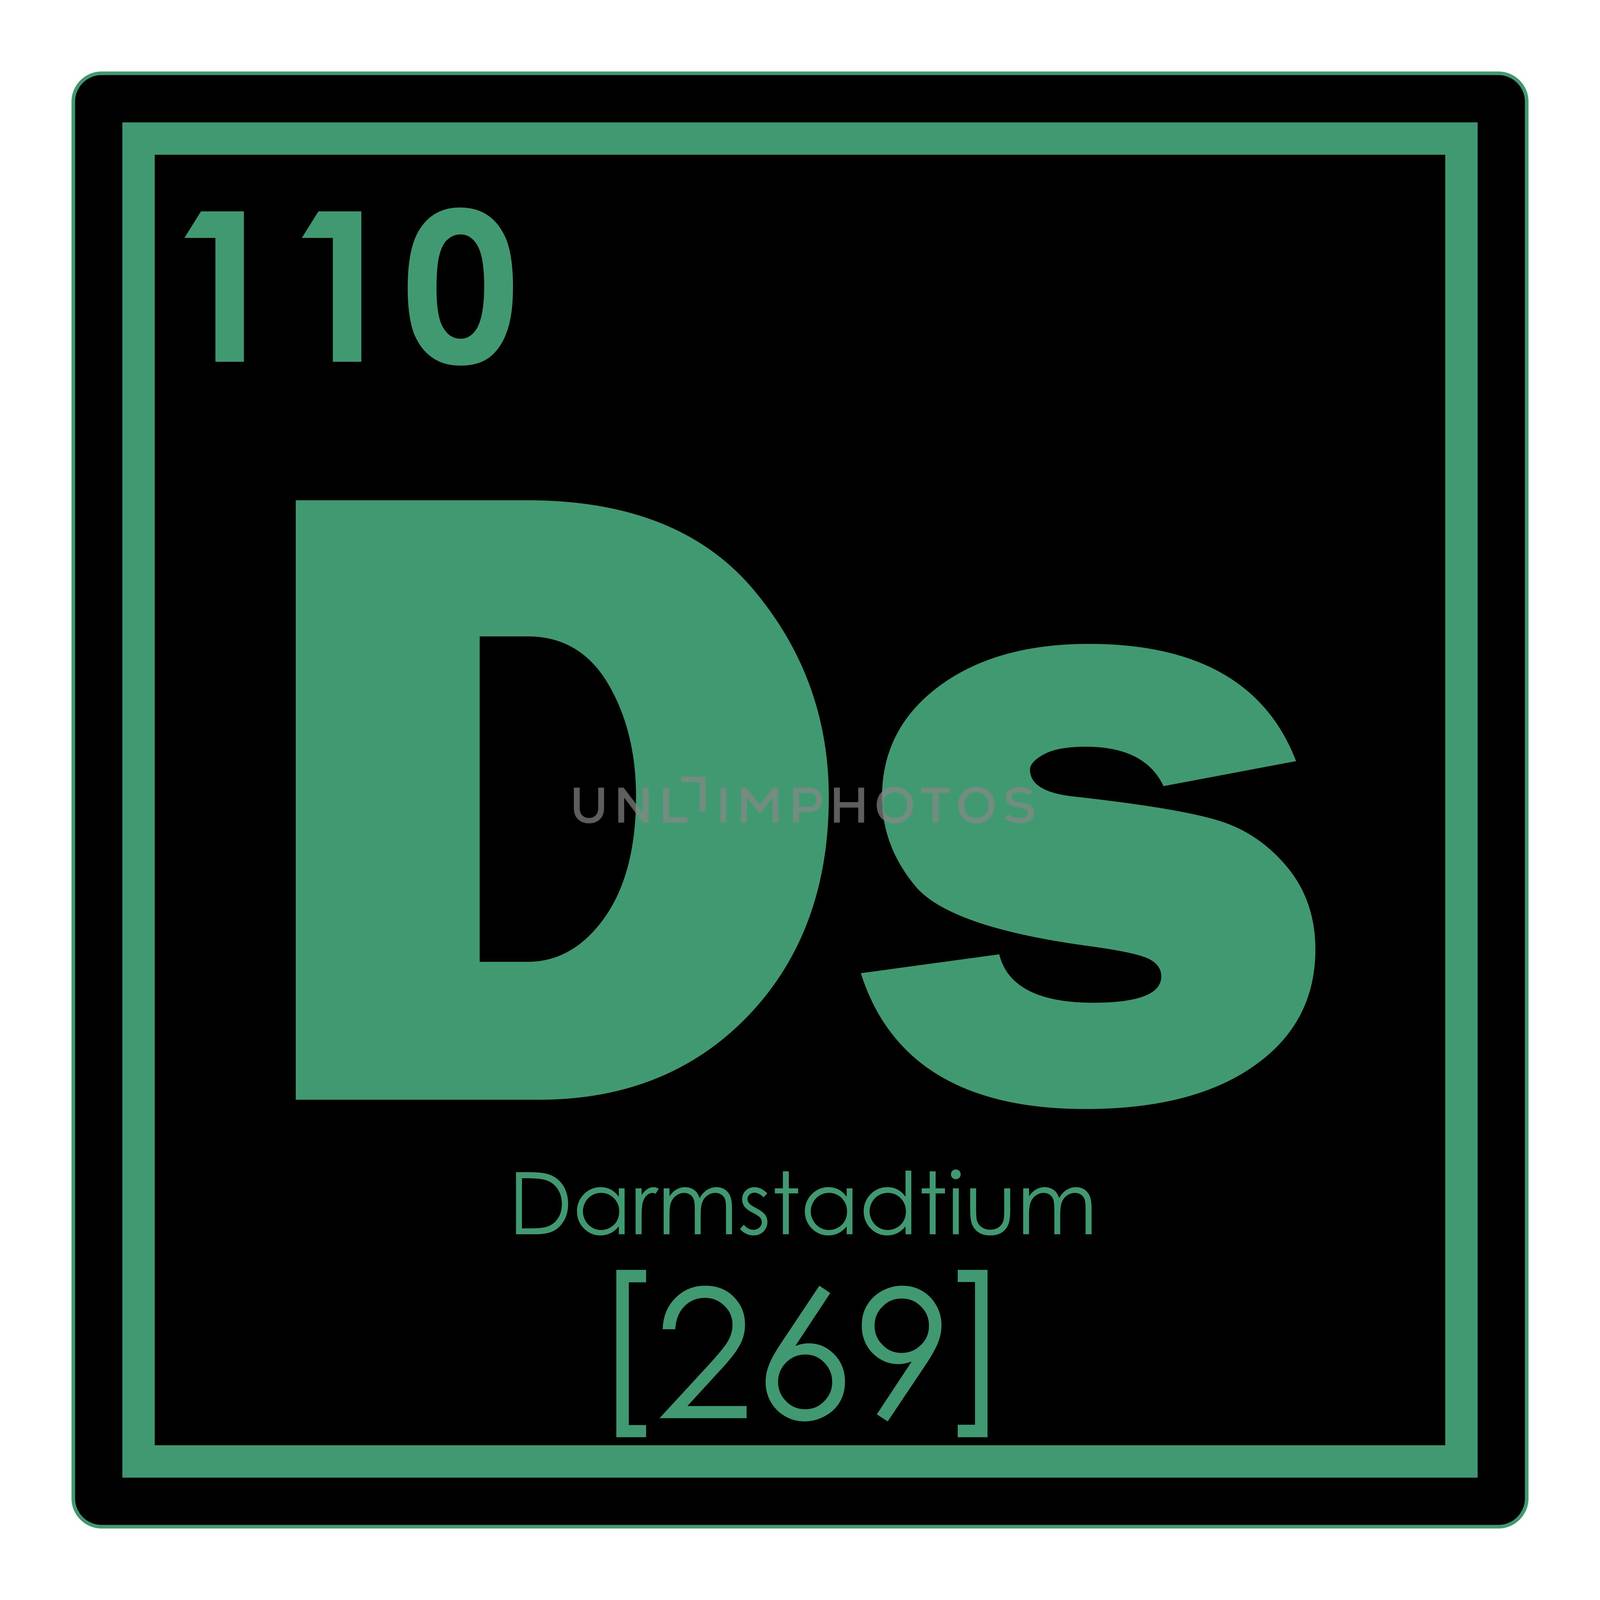 Darmstadtium chemical element periodic table science symbol